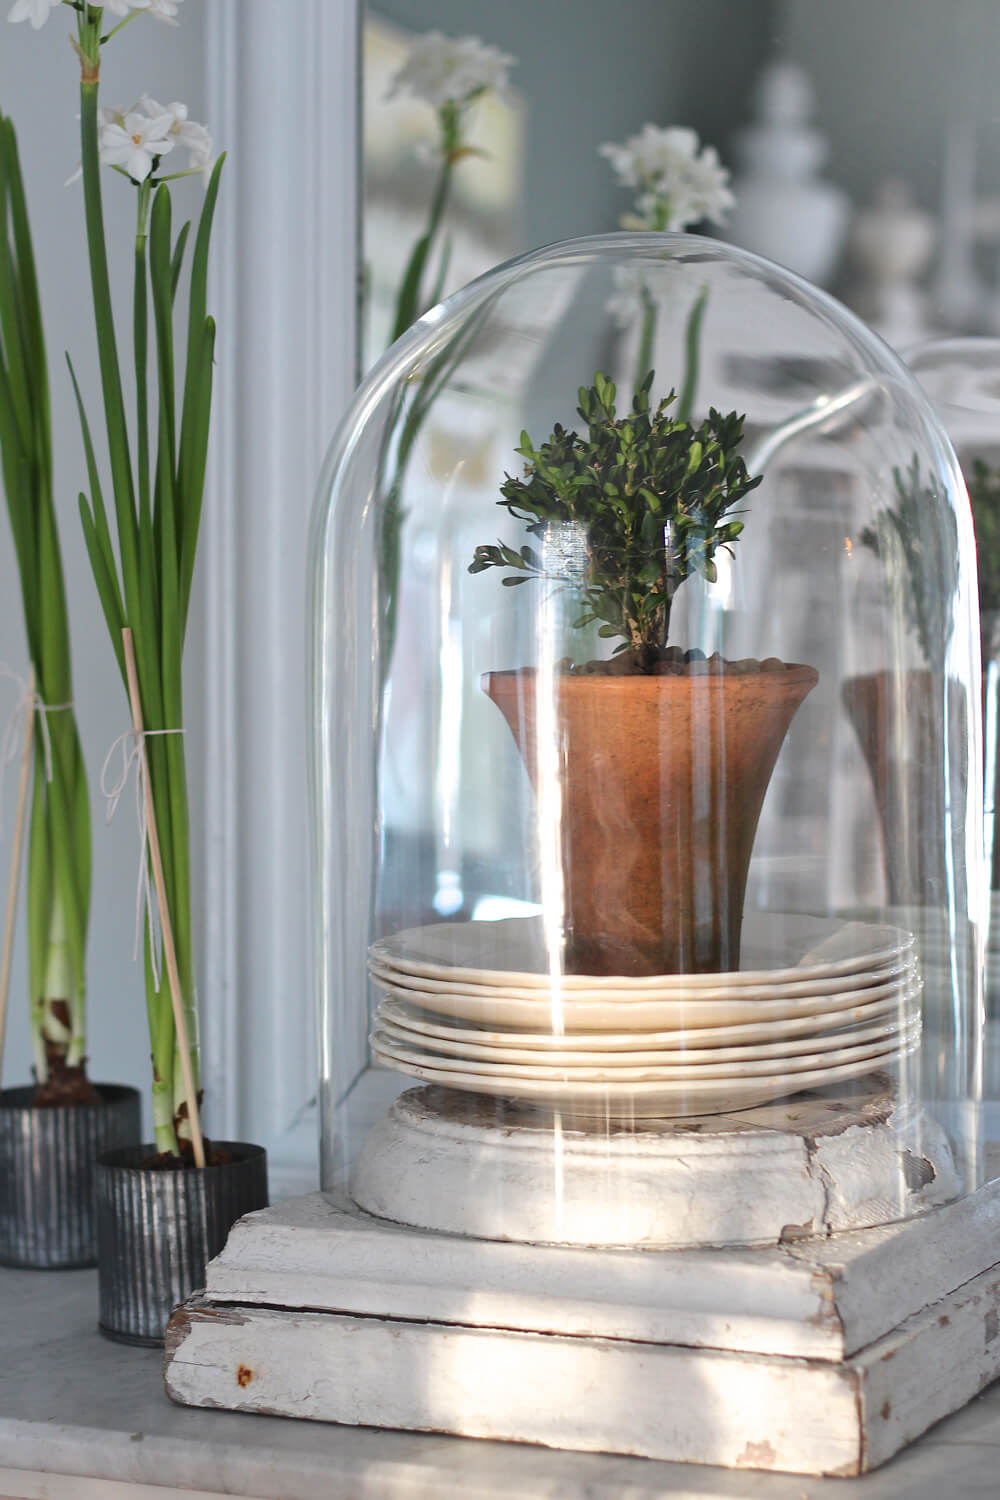 Glass Globe Over a Small Plant Pot